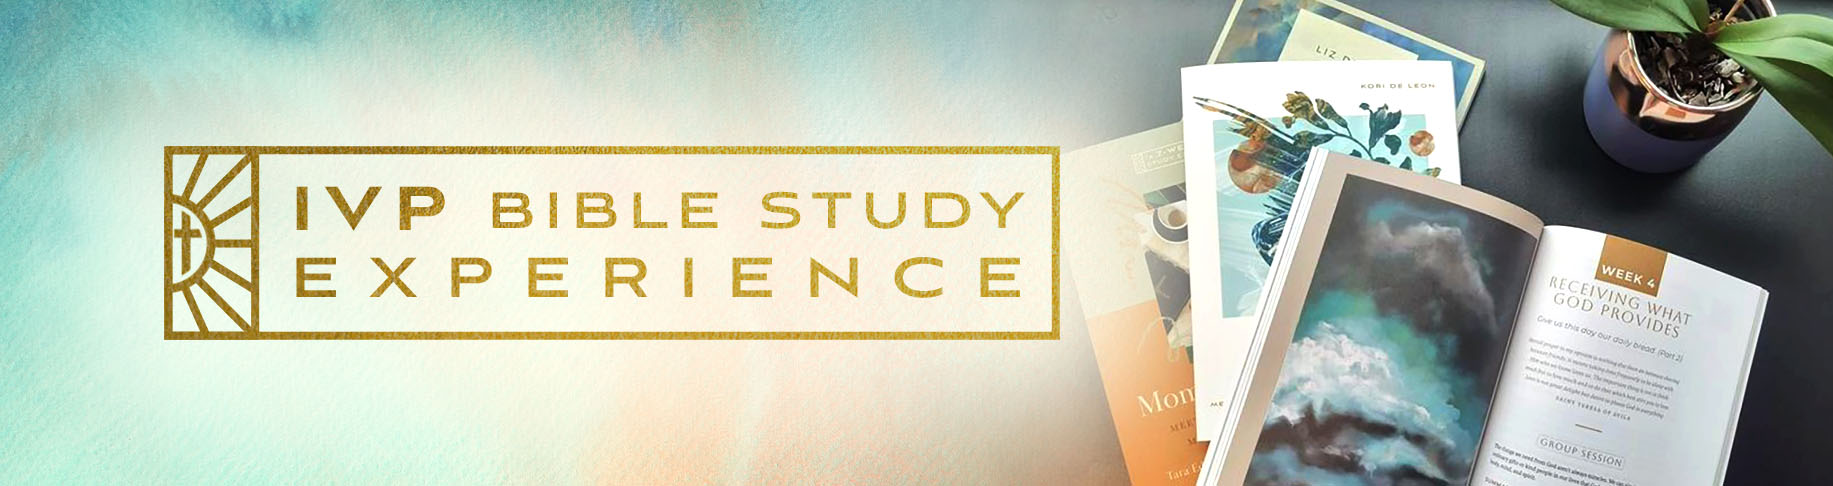 IVP Bible Study Experience